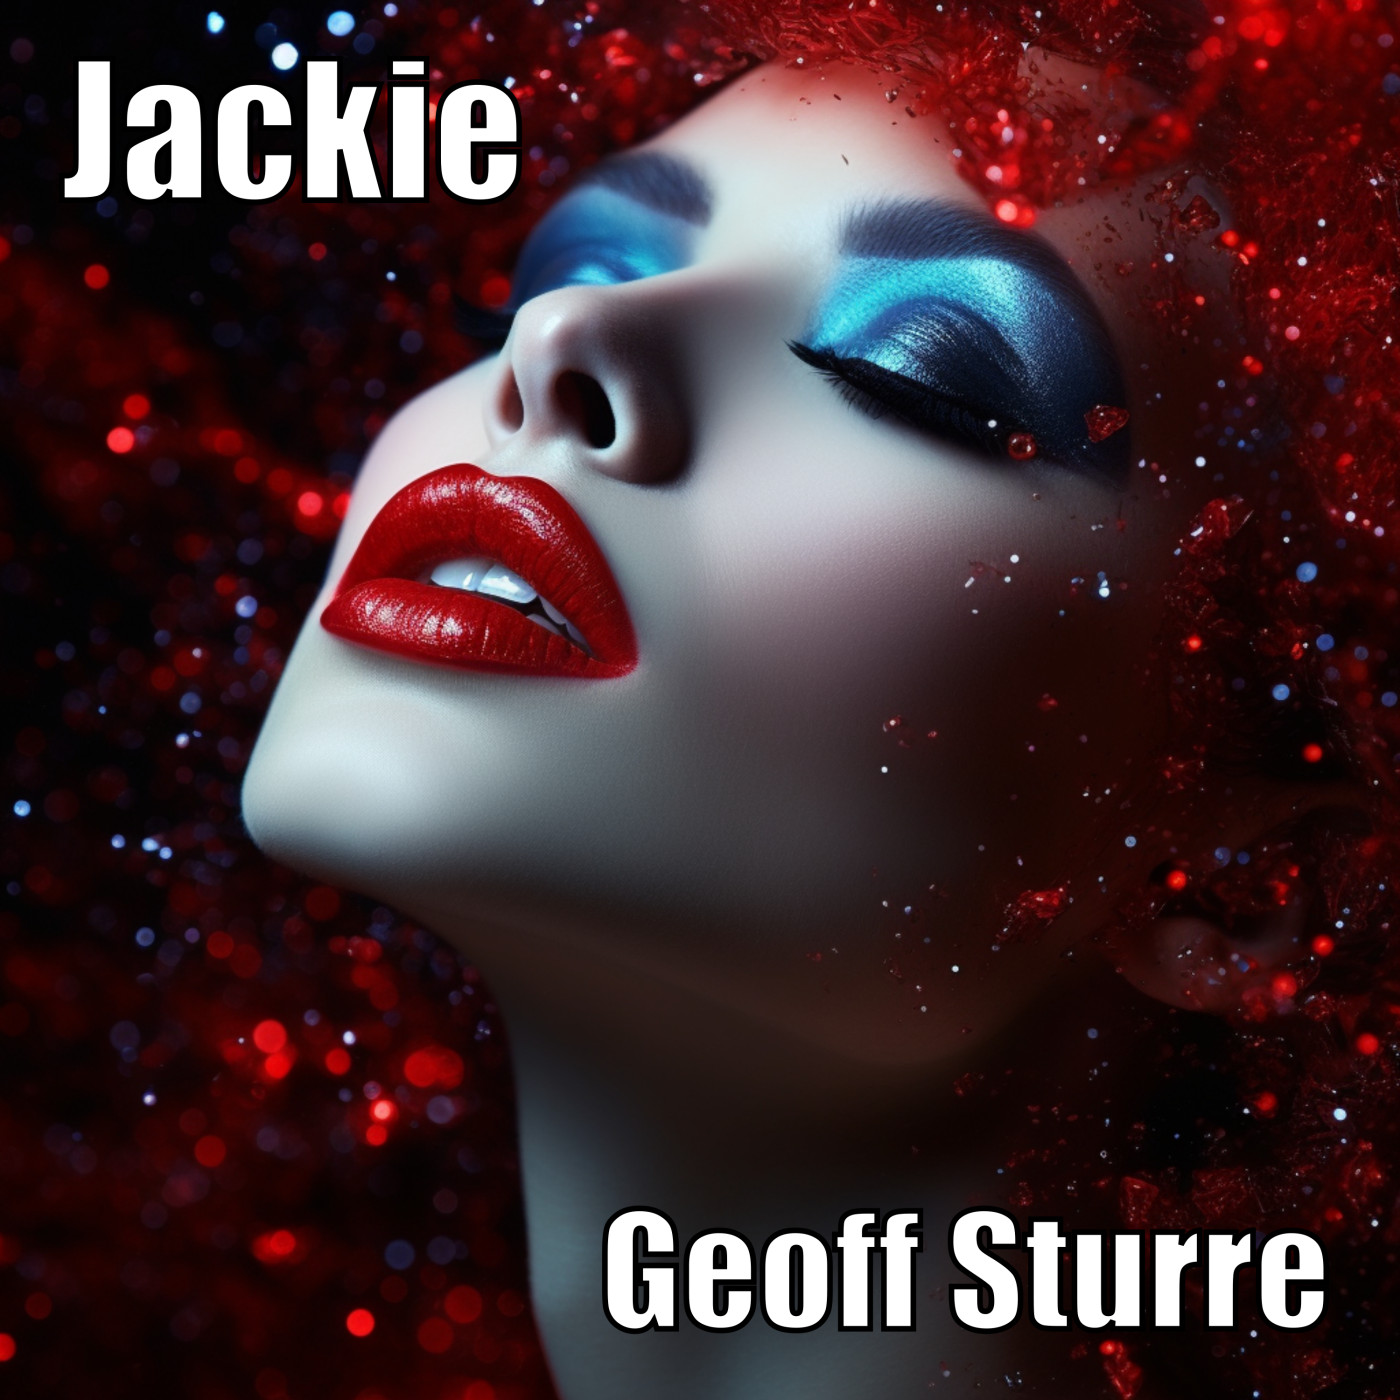 Geoff Sturre – Jackie ‘Single Review’